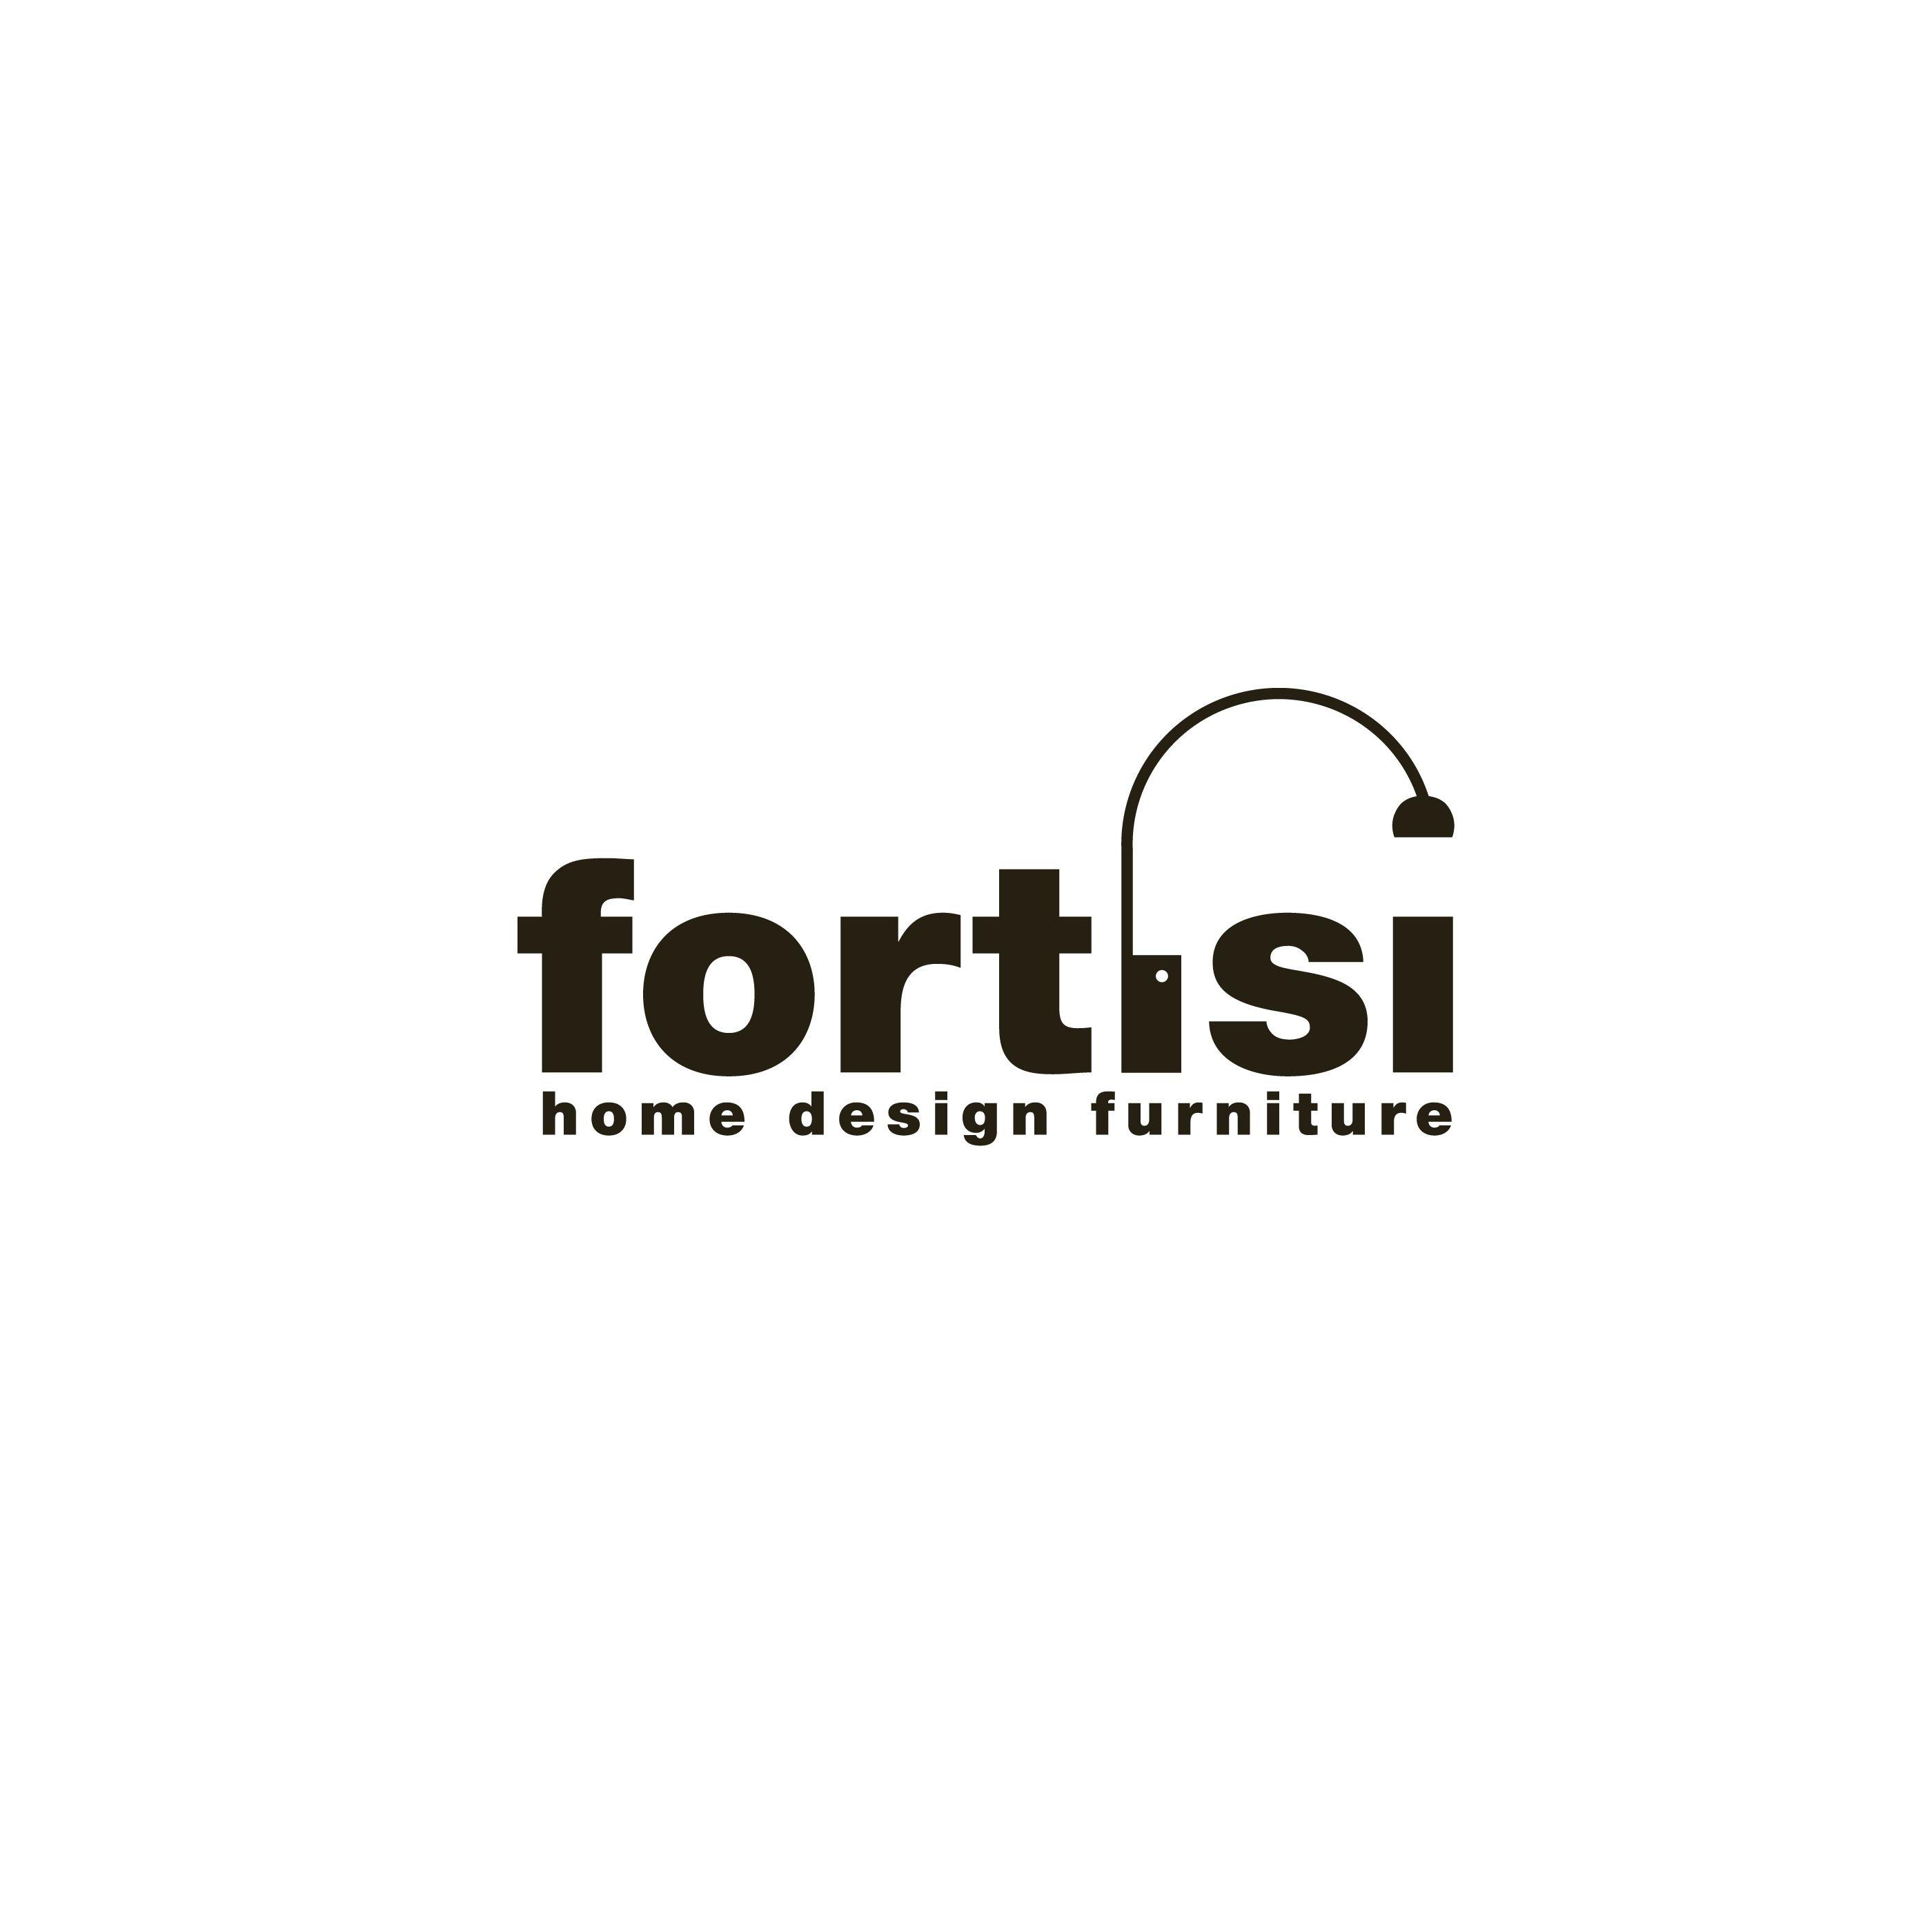 Type Logo - Type Logo for Design Furniture Store - Francesca Pagani - Creative ...